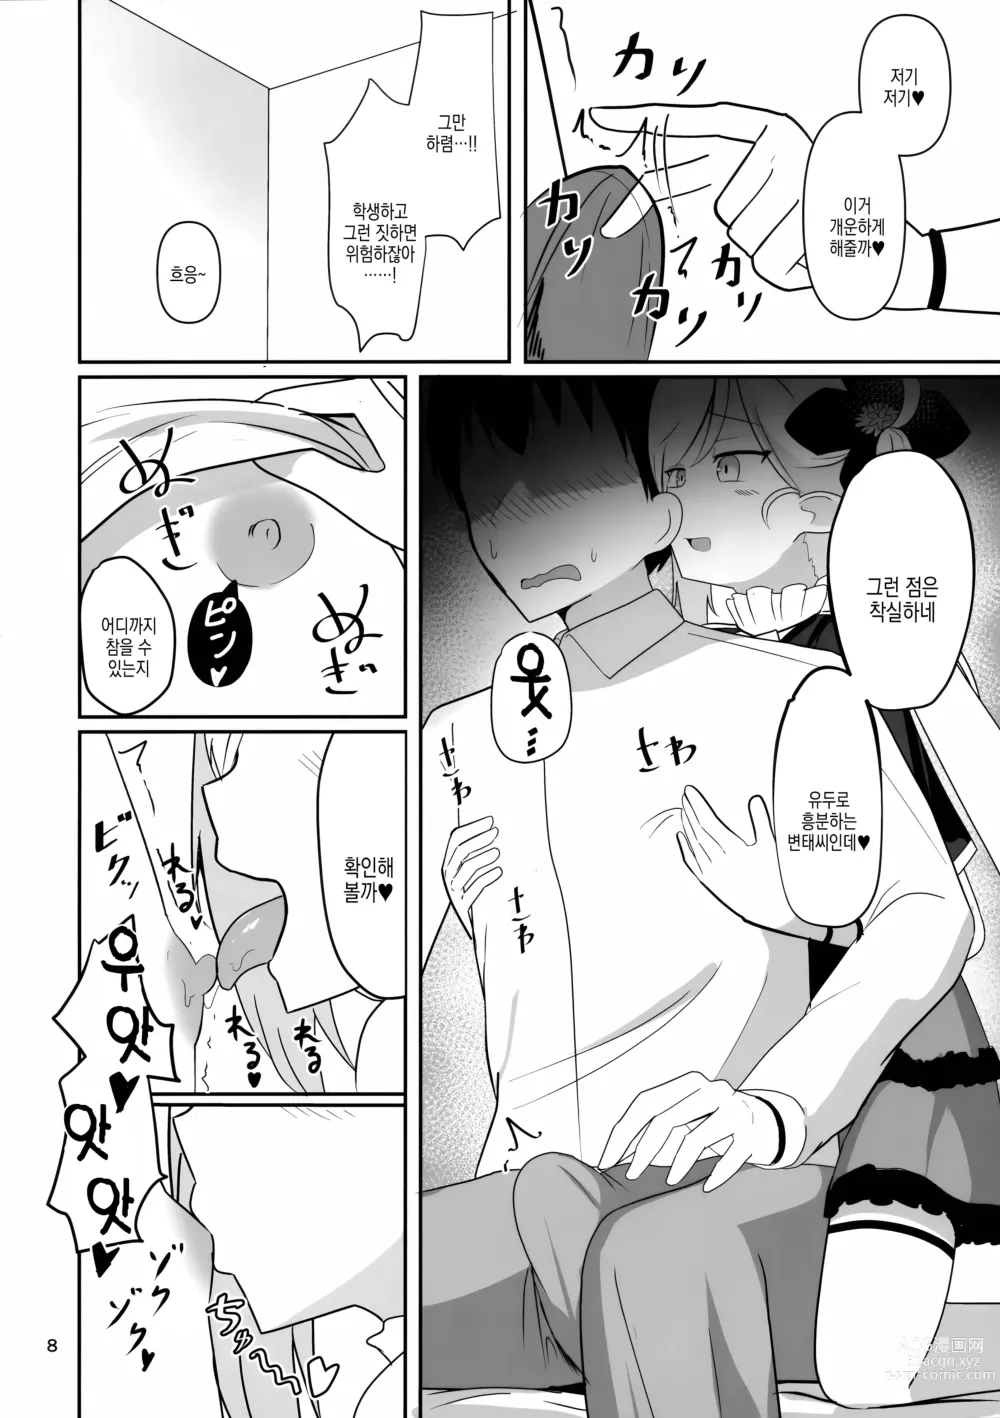 Page 9 of doujinshi 무츠키 쨩과 놀자